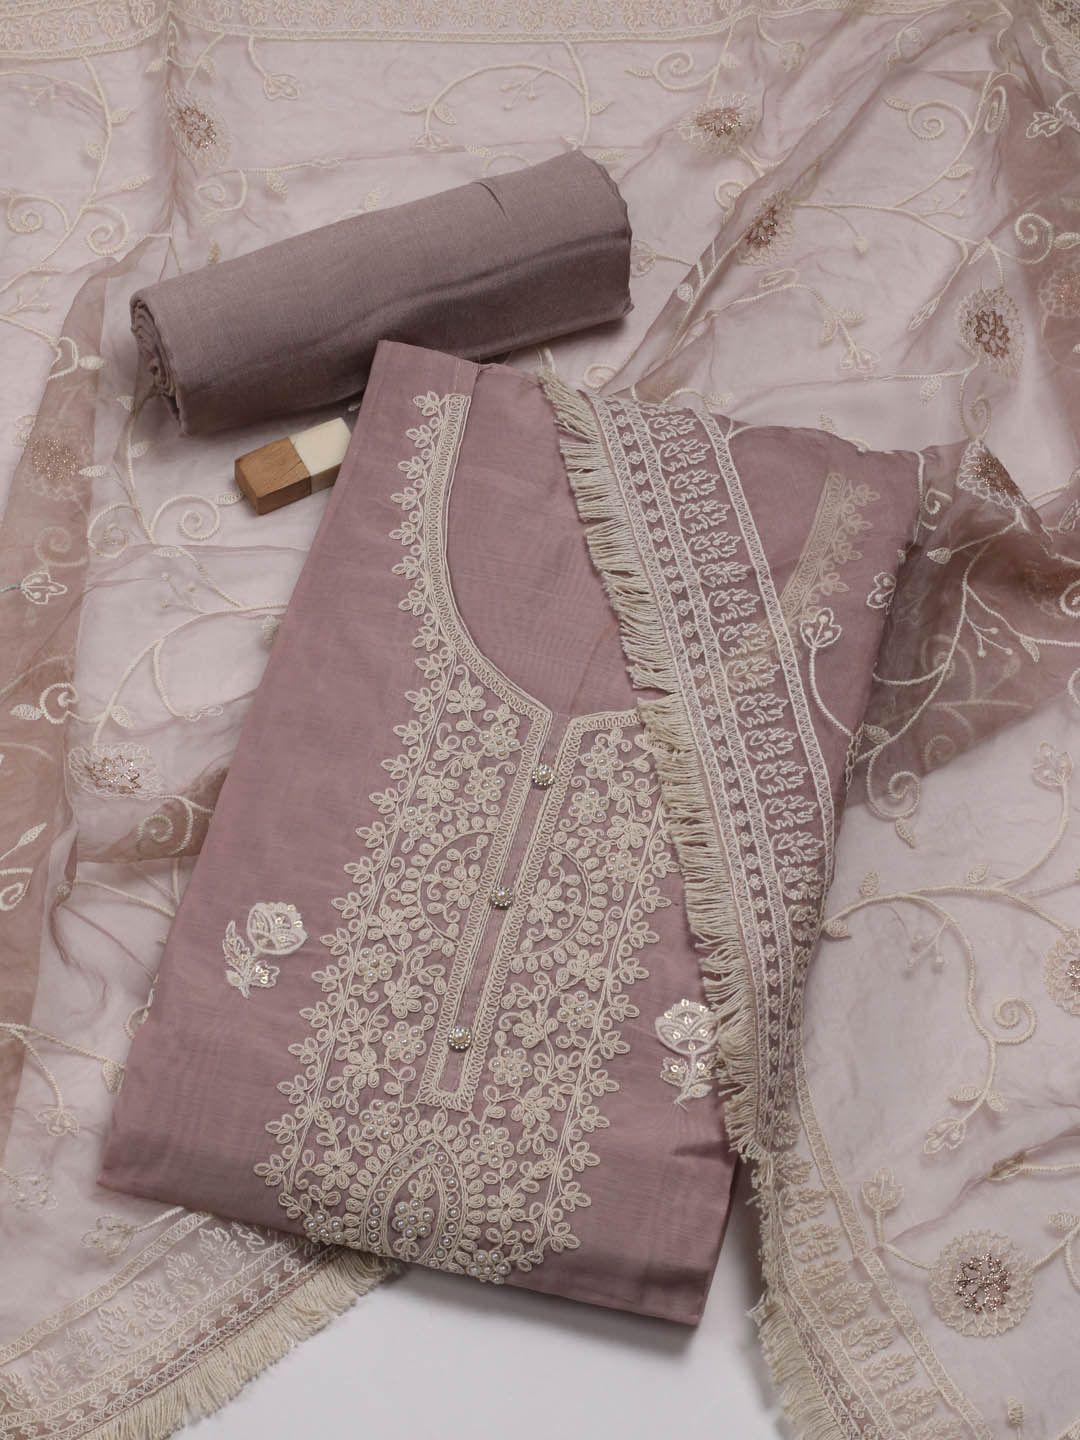 meena bazaar floral embroidered art silk unstitched dress material